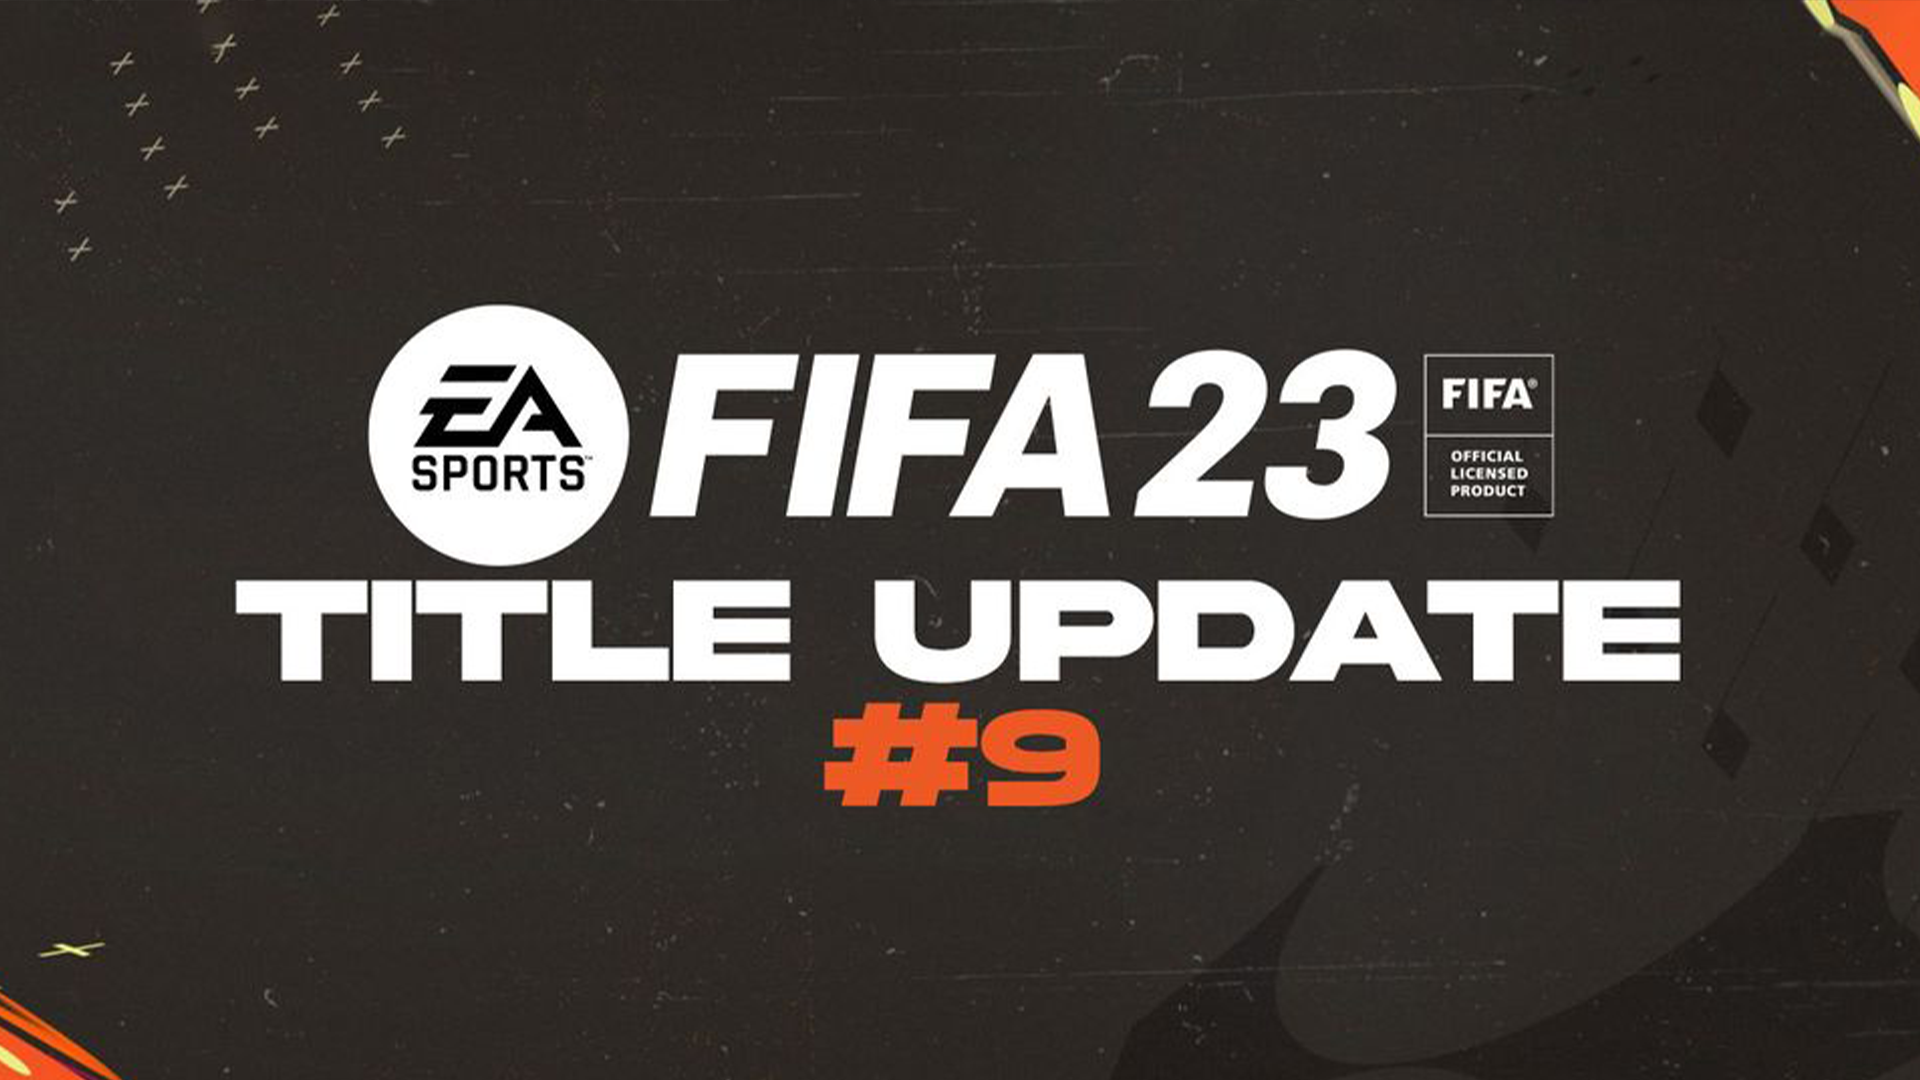 Моды ФИФА 24. FIFA 23 моды. FIFA 23 title update 8. Обновления fifa 23